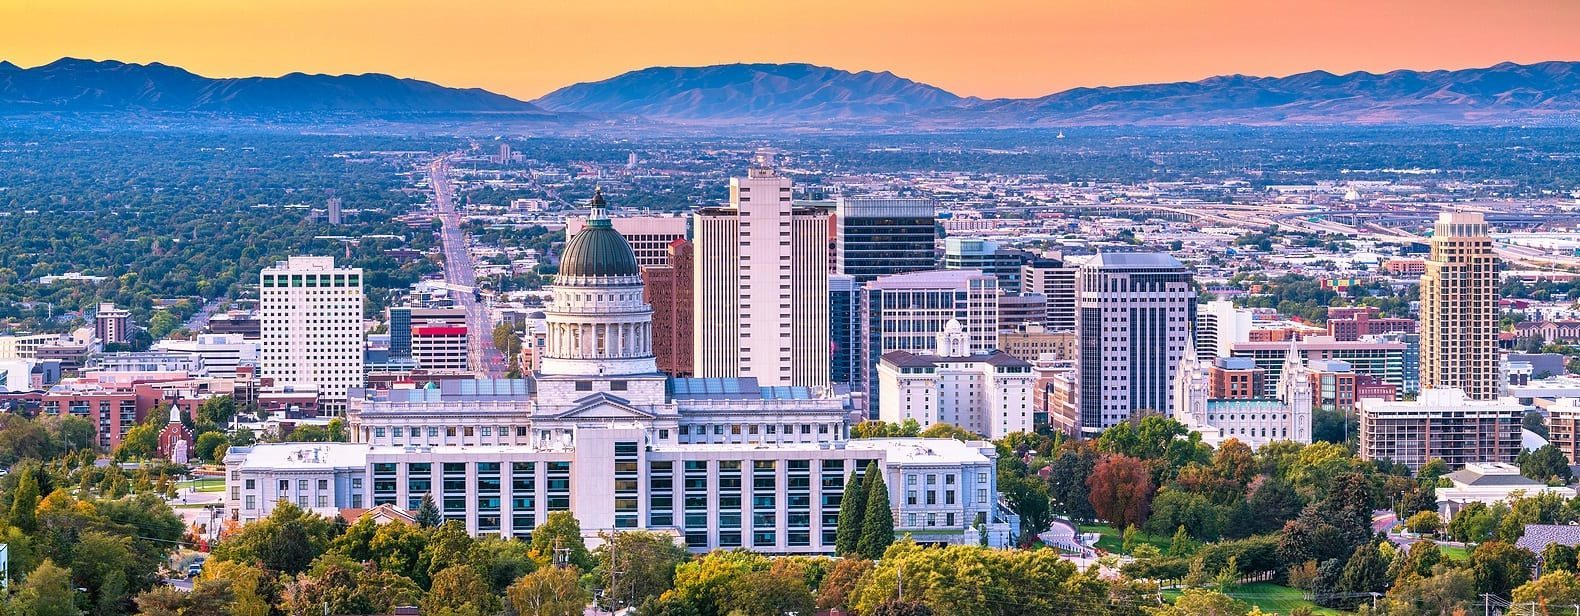 Downtown Salt Lake City Utah is home to Web Design company Firetoss